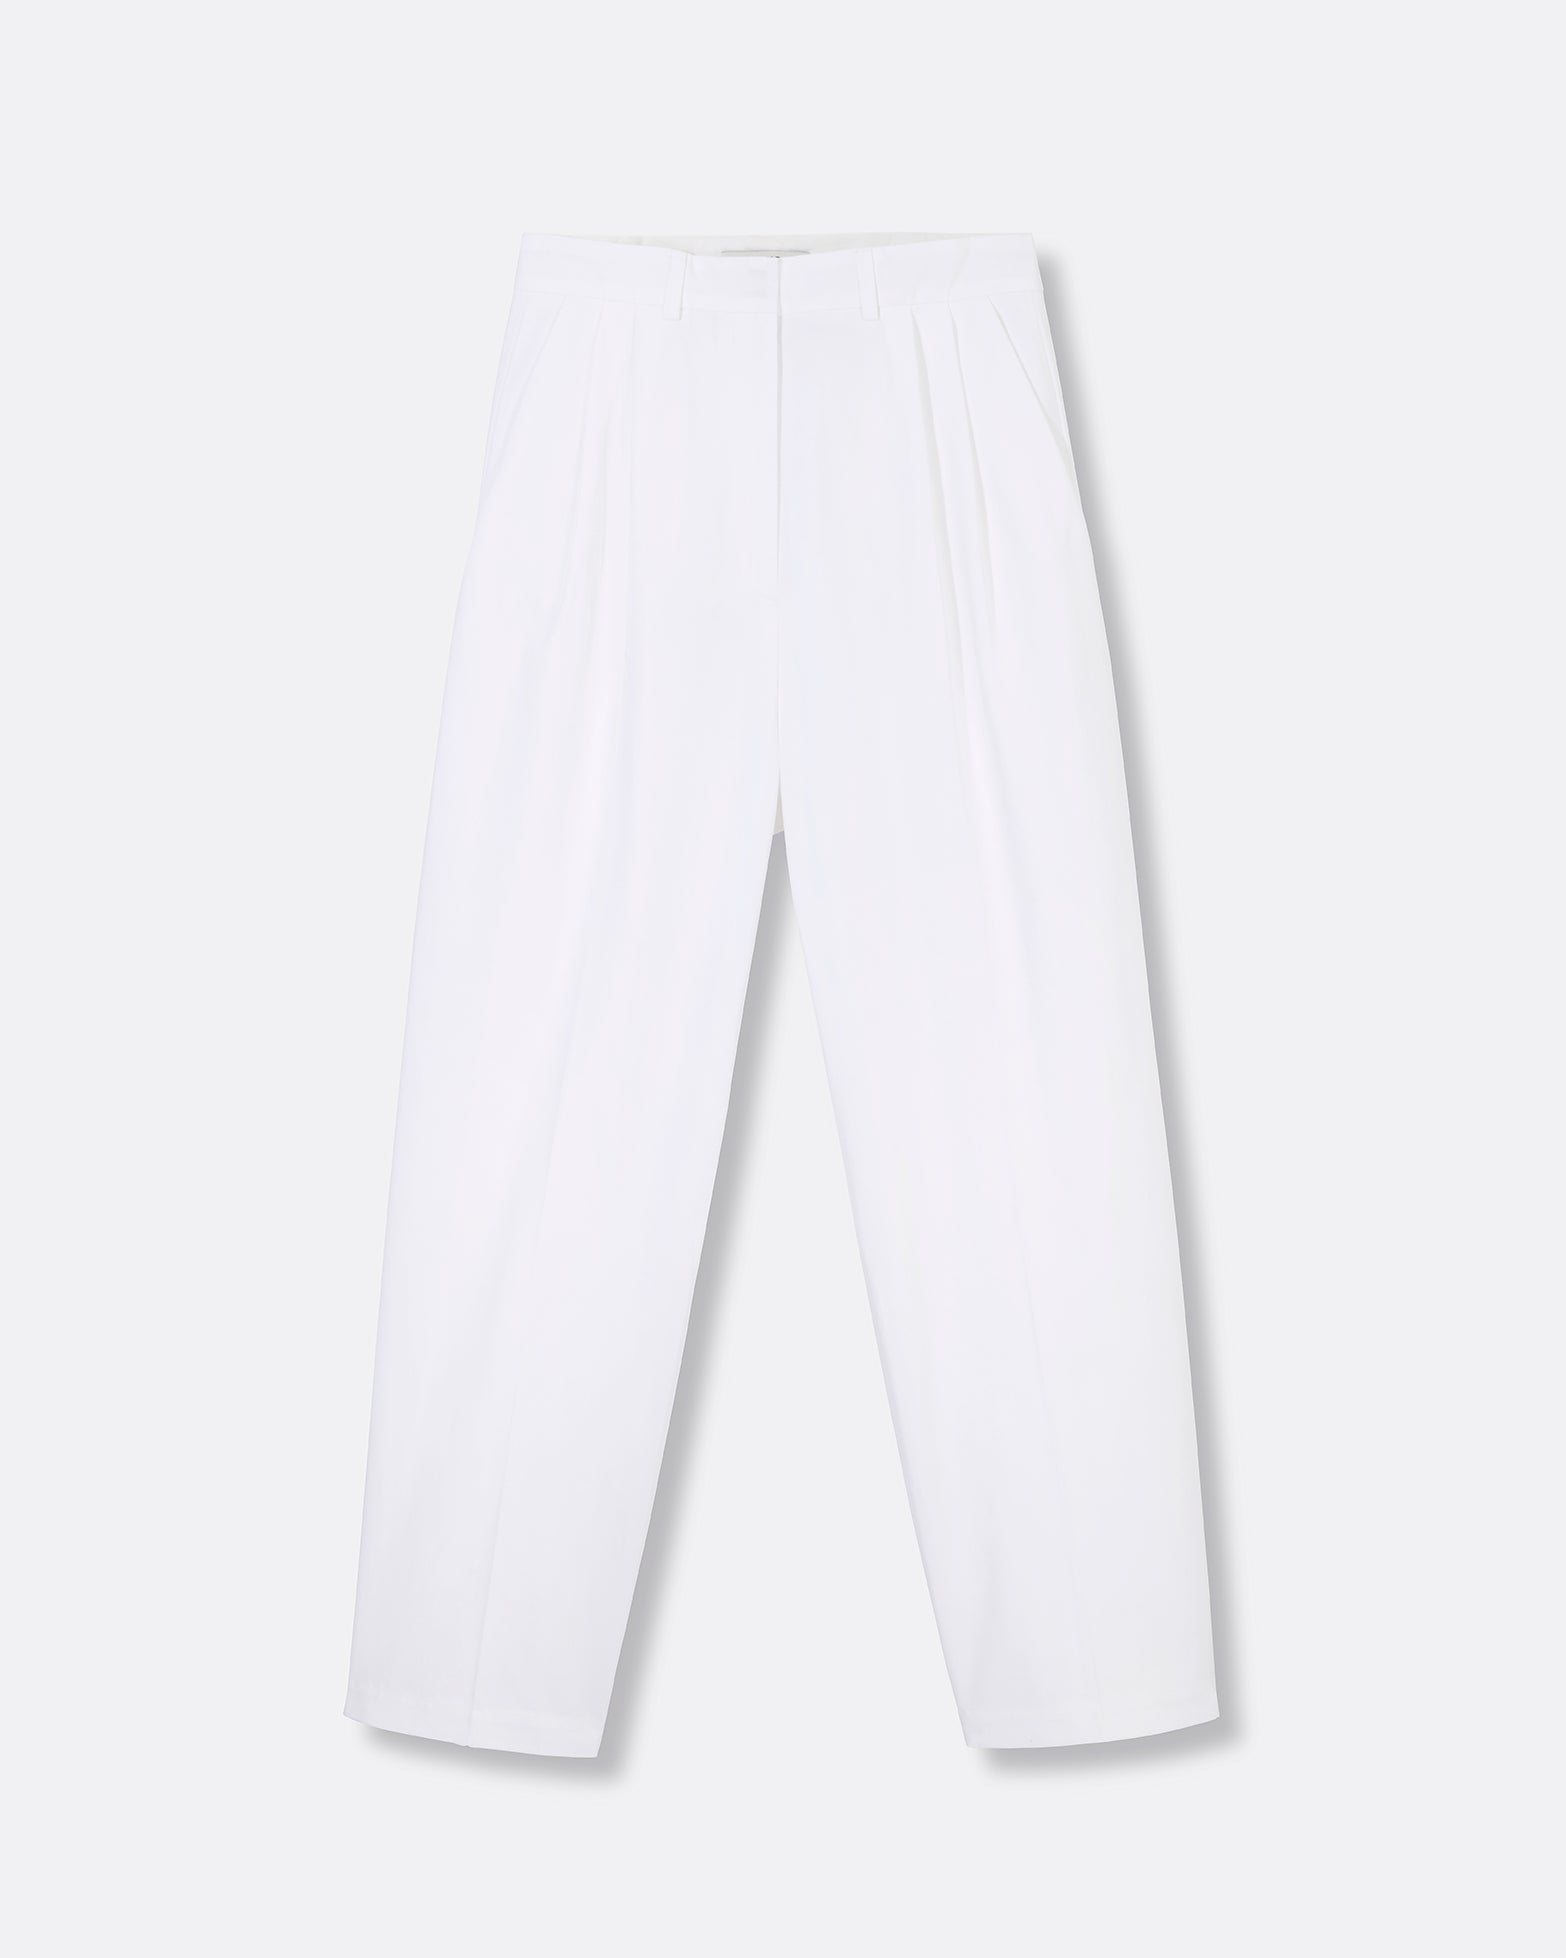 Carolina trousers - white organic cotton - riand28